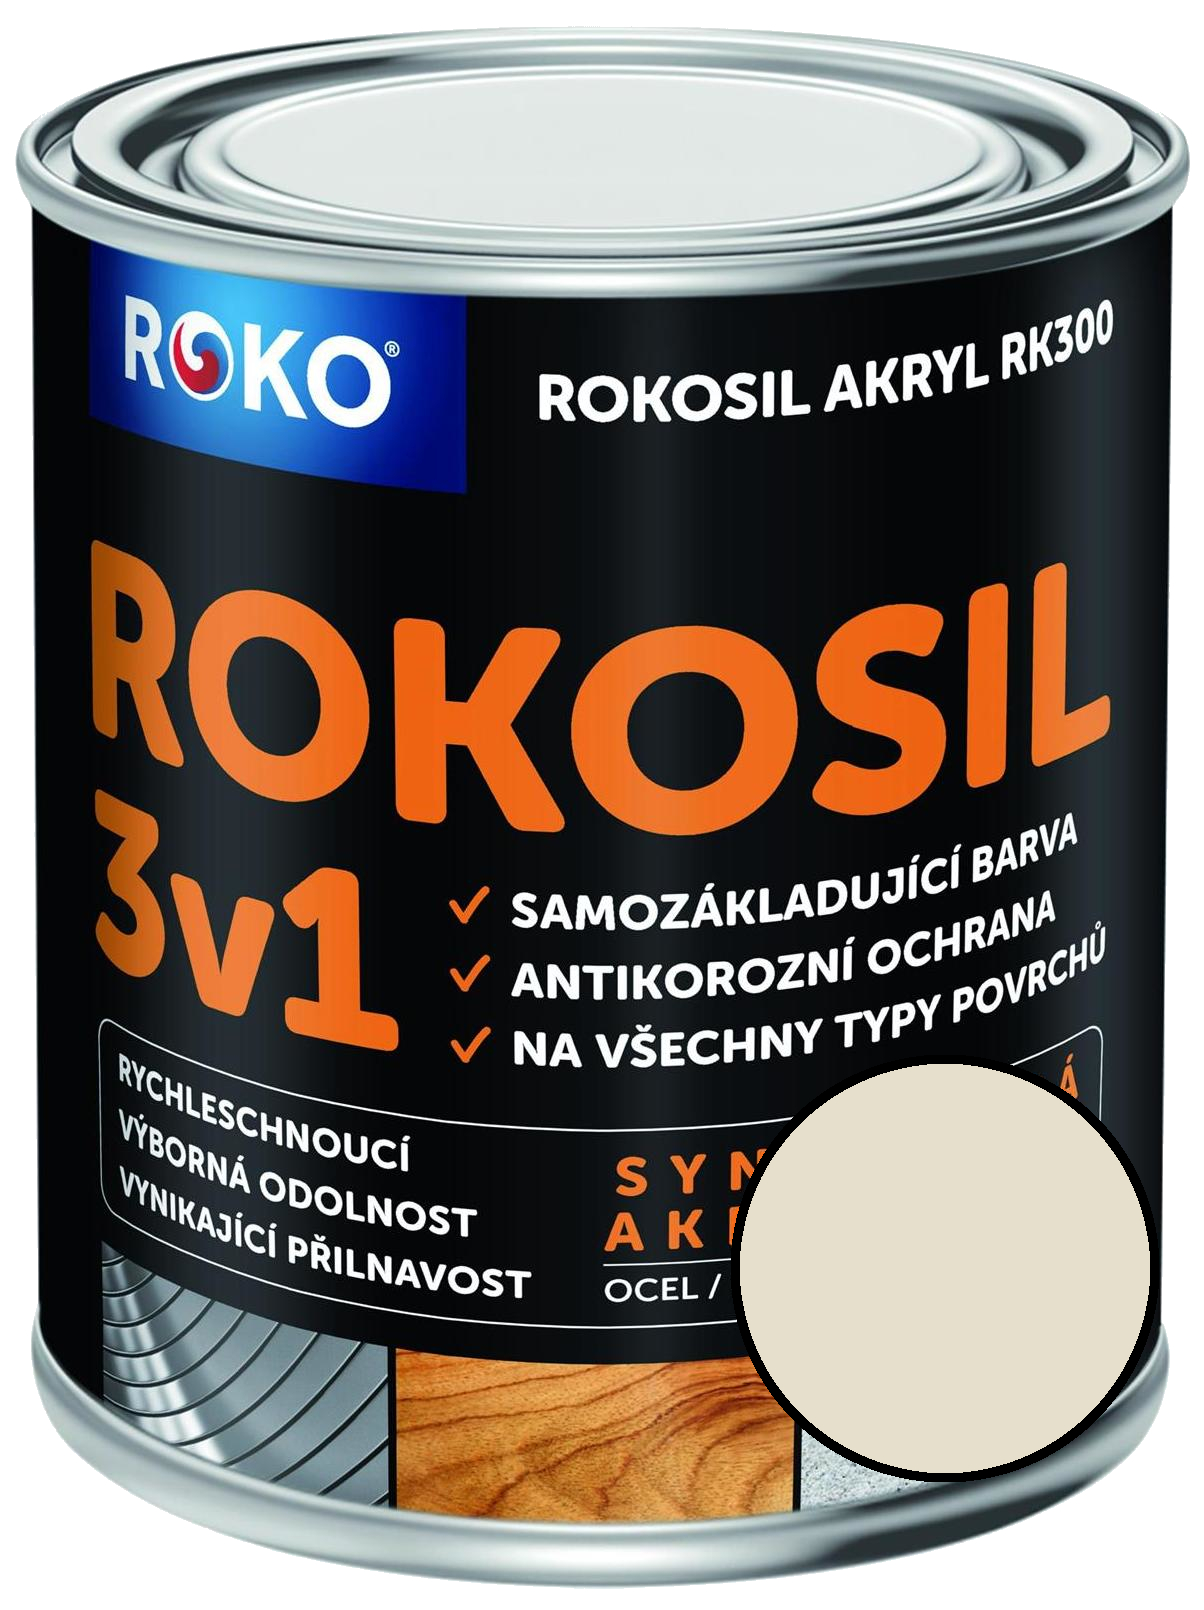 Barva samozákladující Rokosil akryl 3v1 RK 300 6003 slonová kost